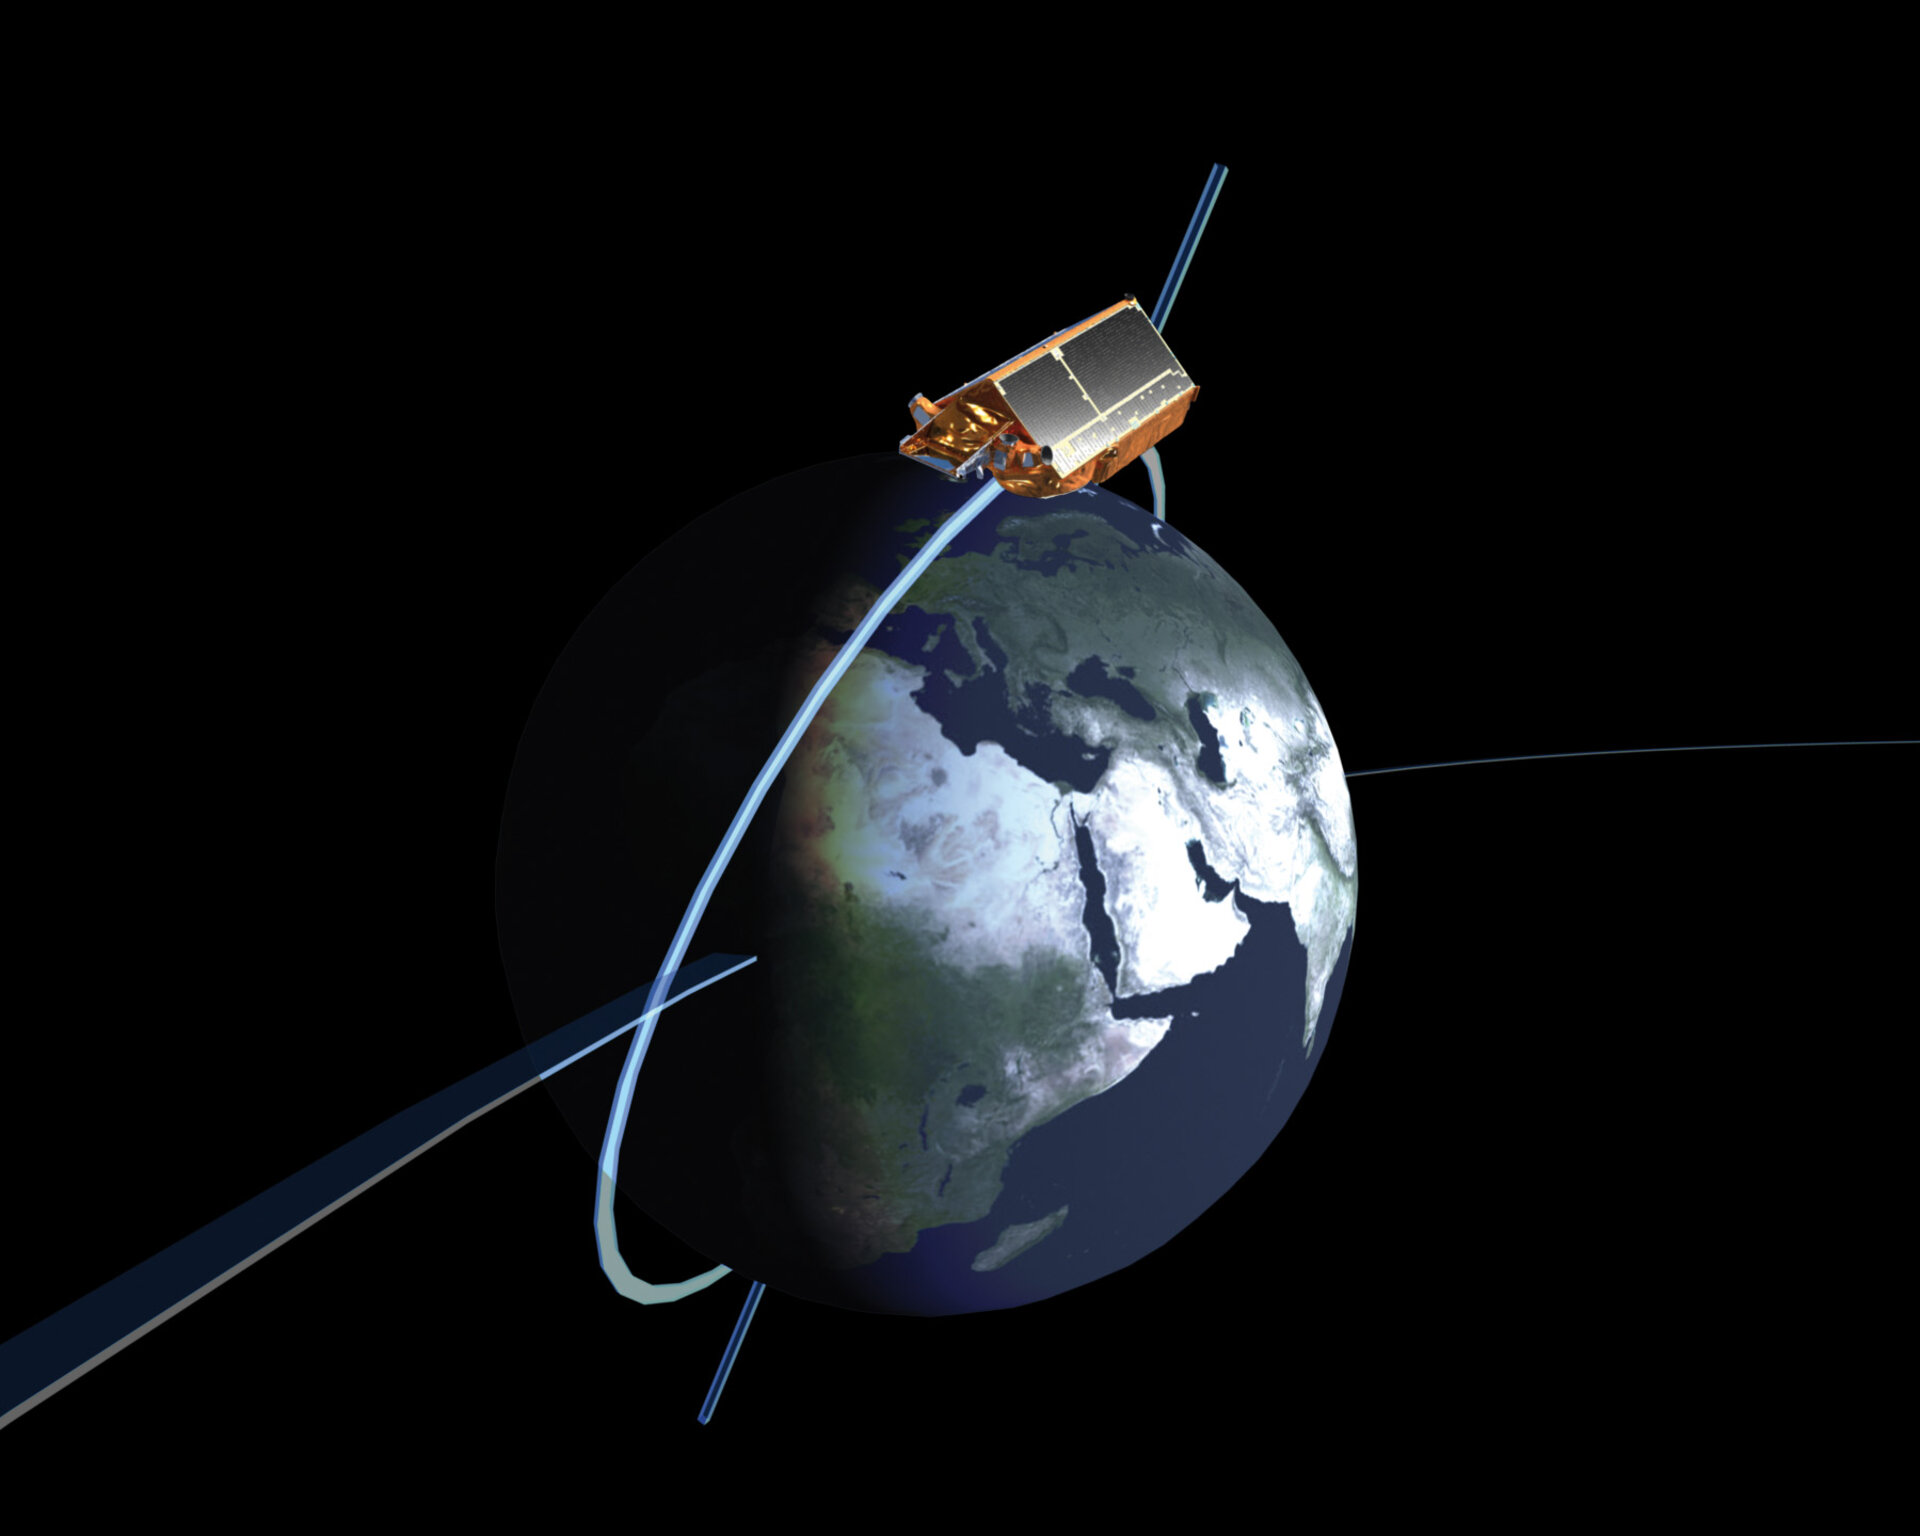 CryoSat's orbit